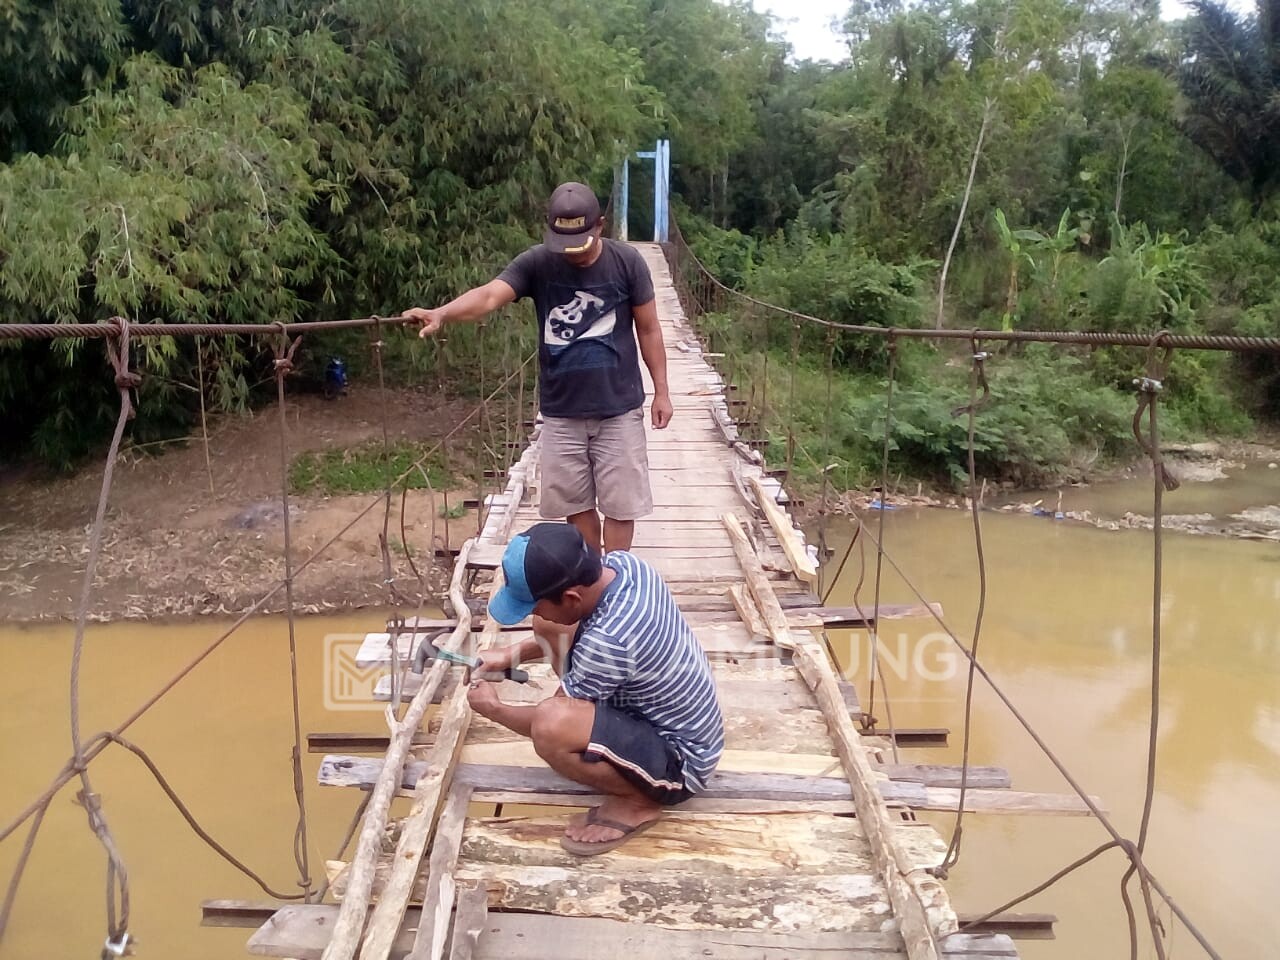 Pak Bupati, Tolong Perbaiki Jembatan Kami!